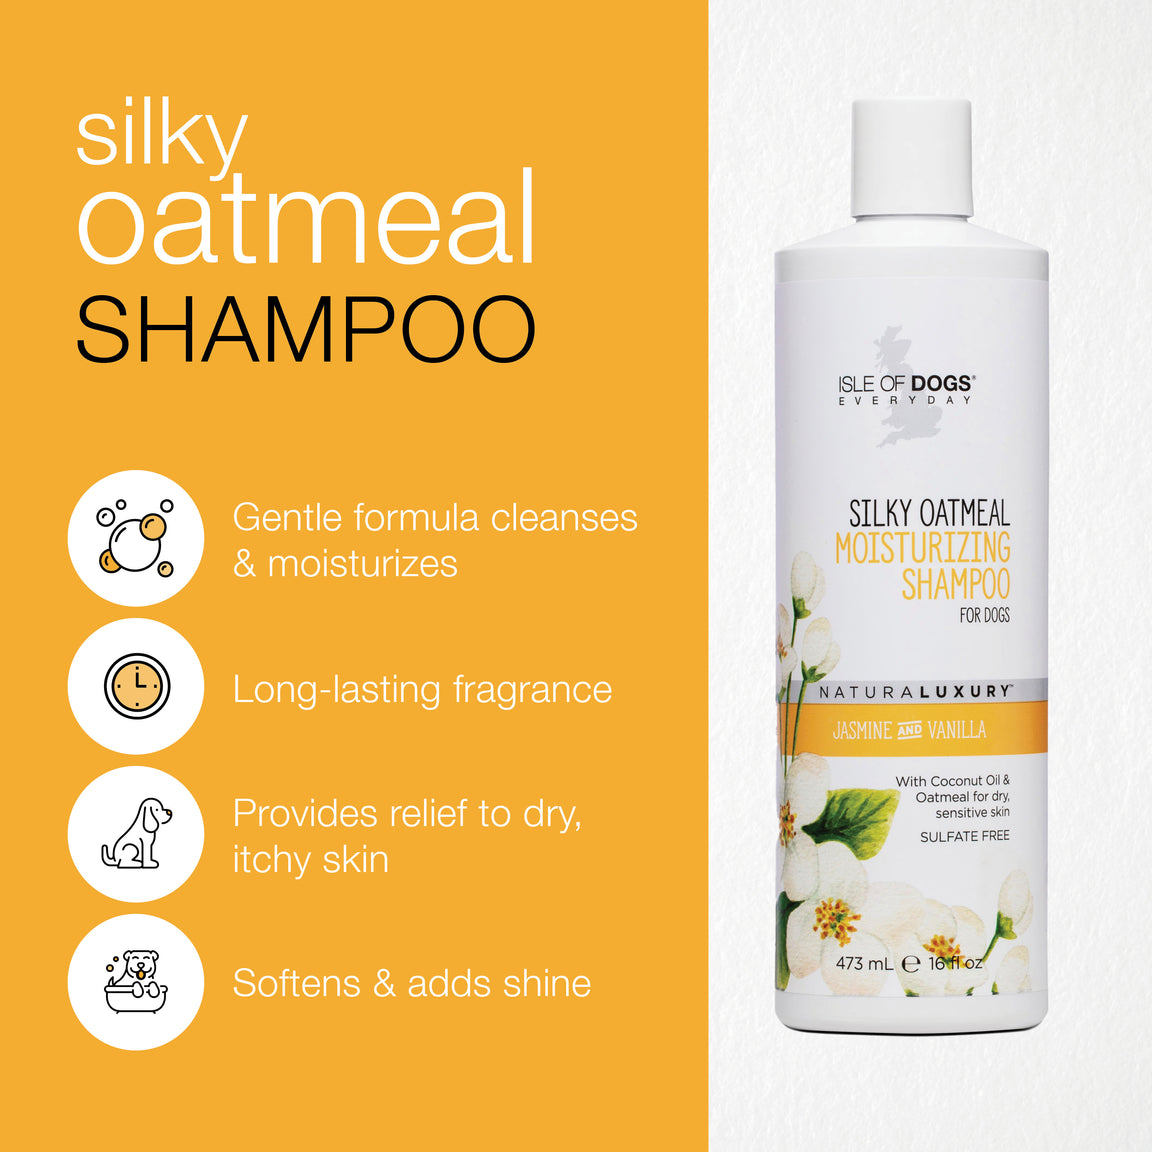 IOD Naturaluxury Silky Oatmeal 500ml shampoo